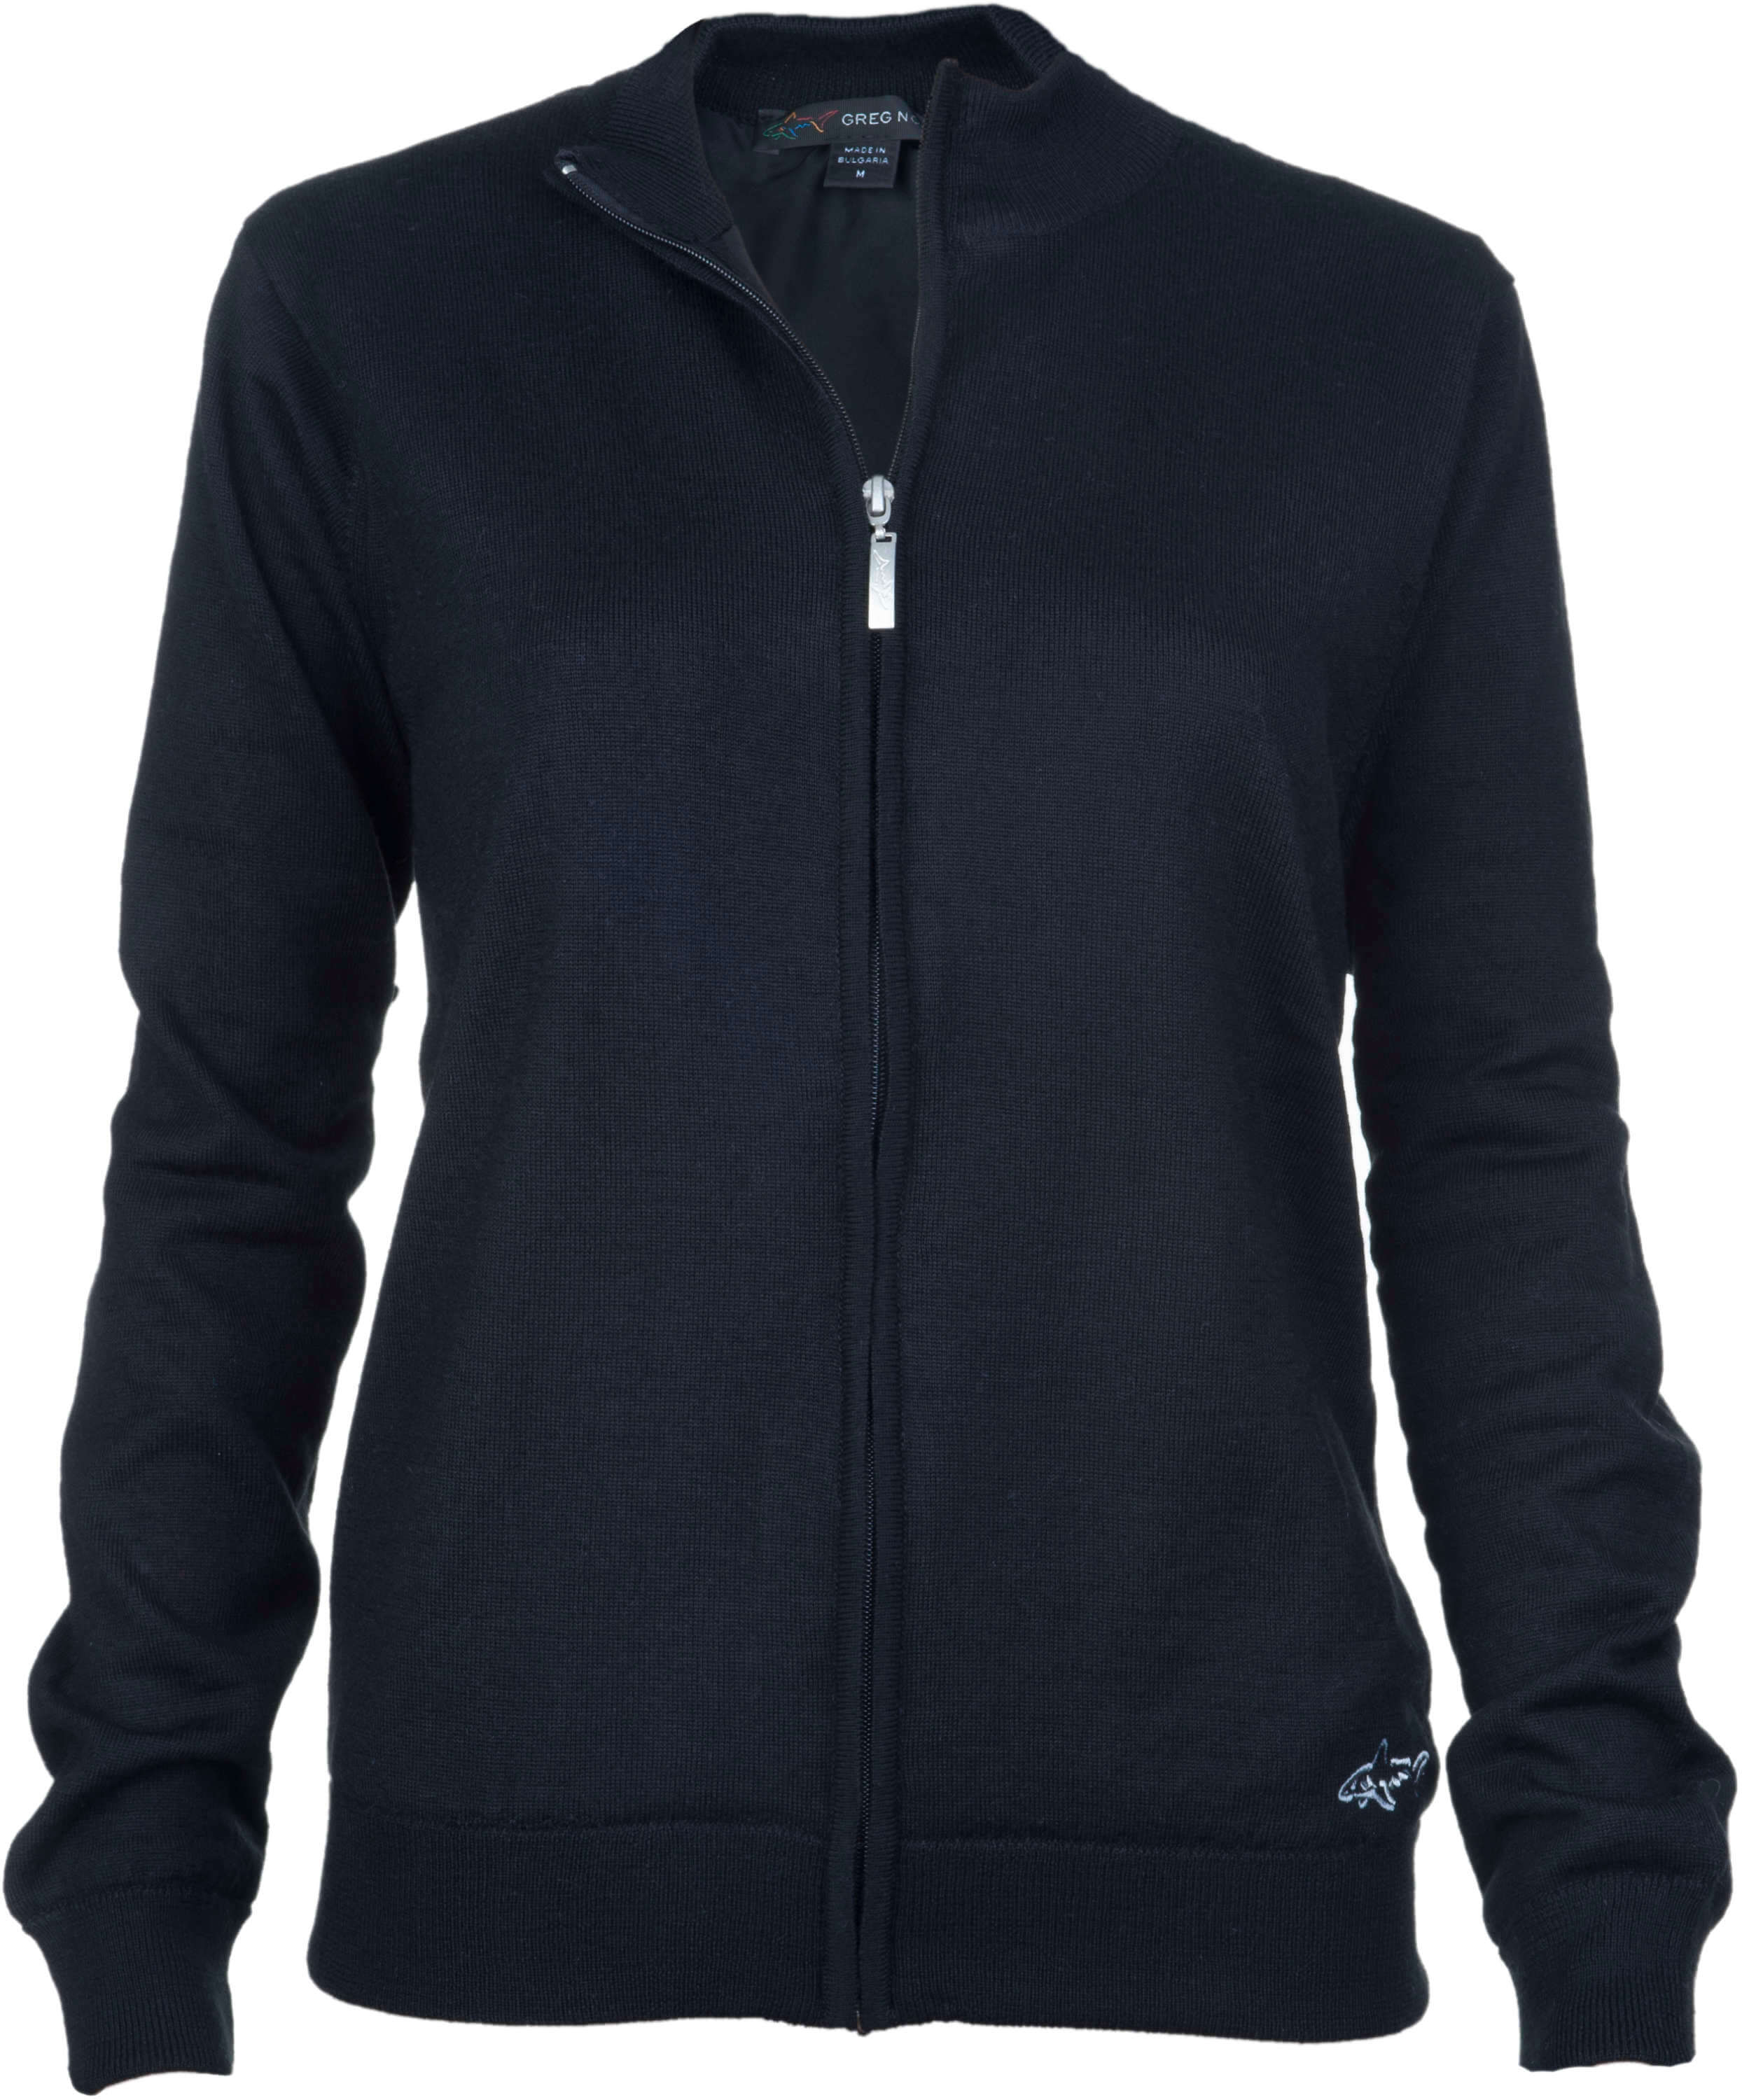 Greg Norman Windbreaker Lined Full-Zip Sweater, black (vanto)